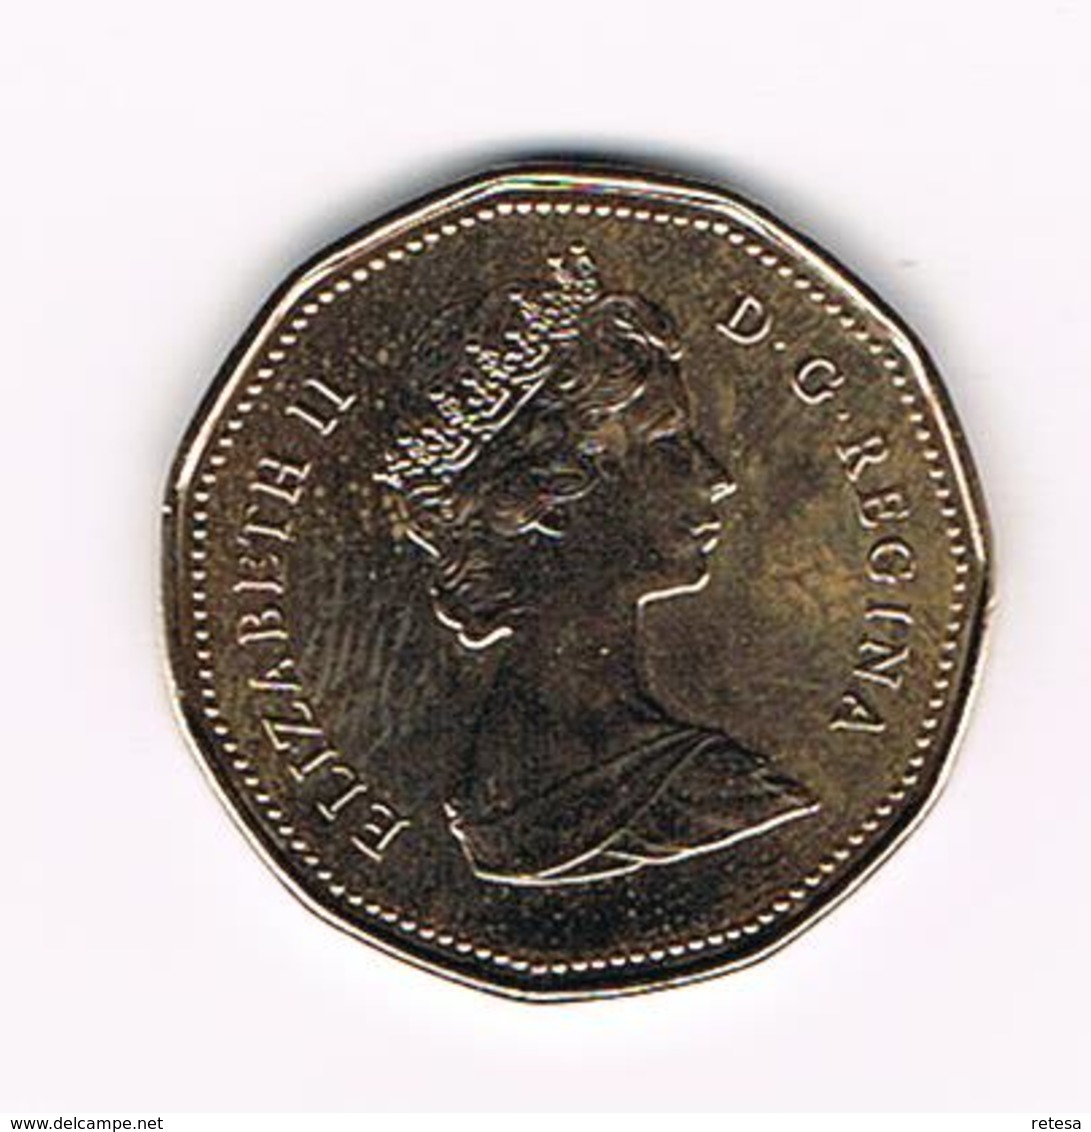 &-  CANADA 1 LOON DOLLAR  1988 - Canada